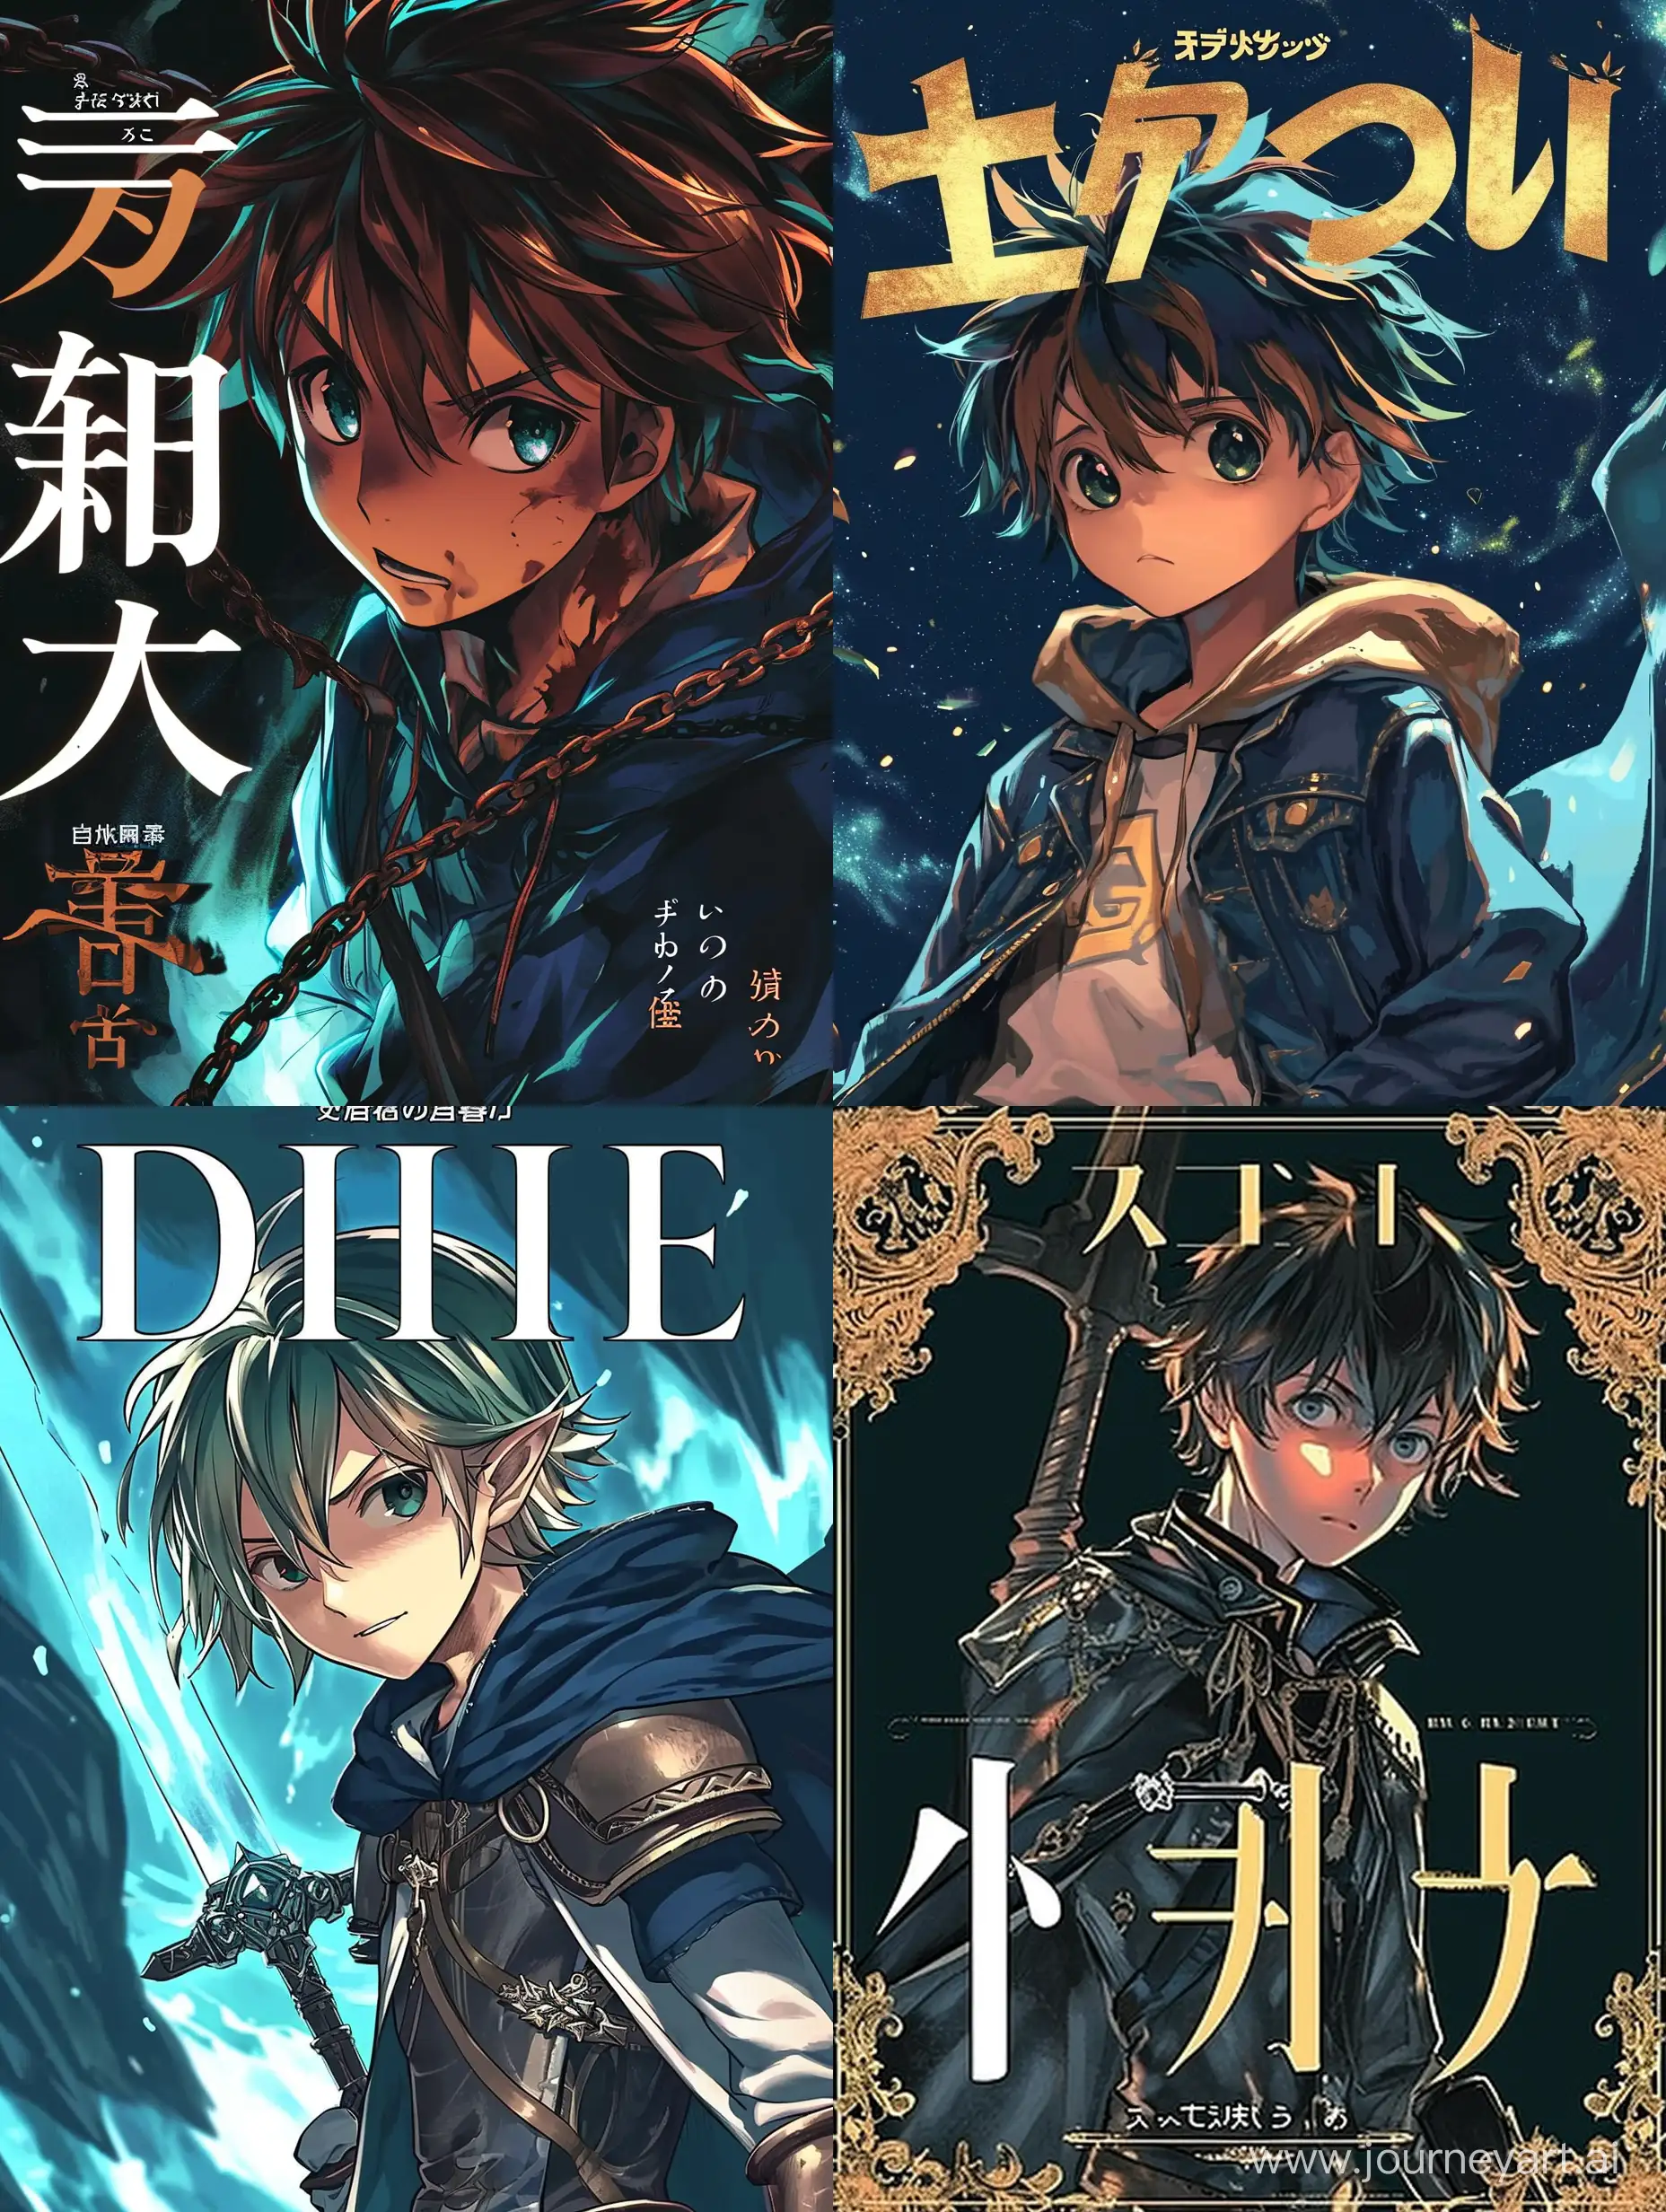 Isekai-and-Fantasy-Light-Novel-Cover-with-Boy